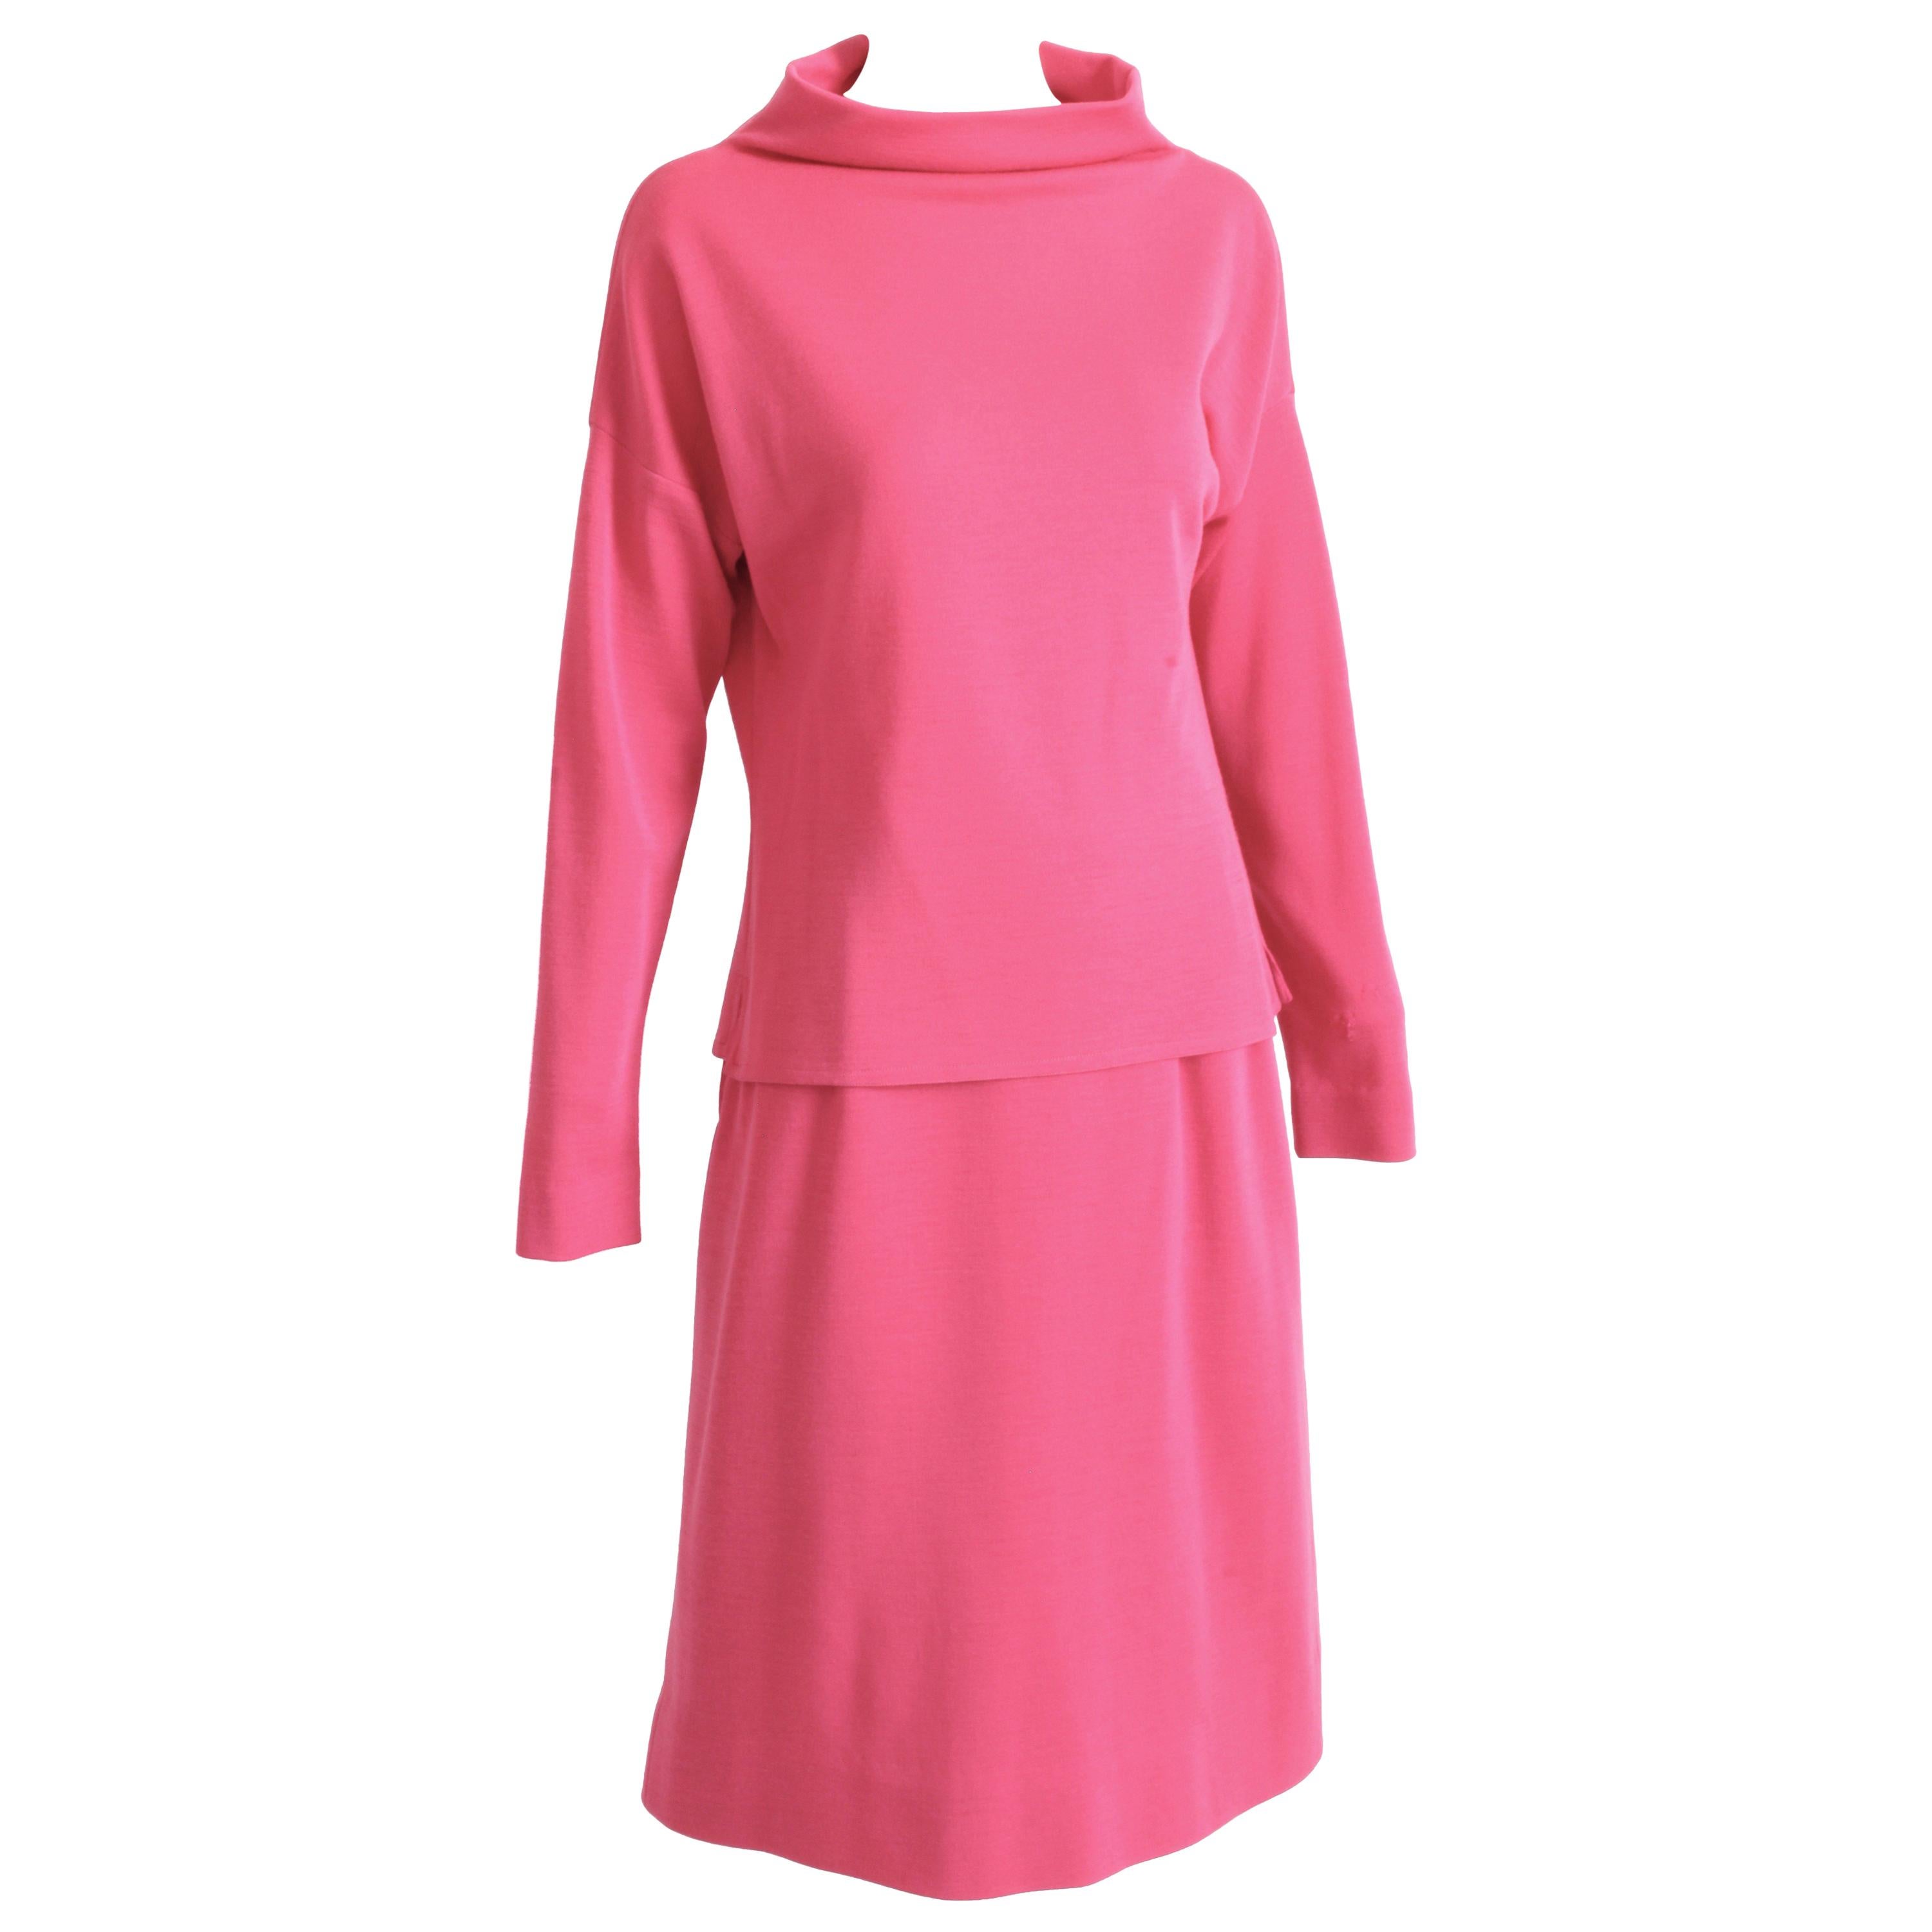 Bonnie Cashin Pink Knit Suit 2pc Raglan Top and Skirt Mid 20th Century M